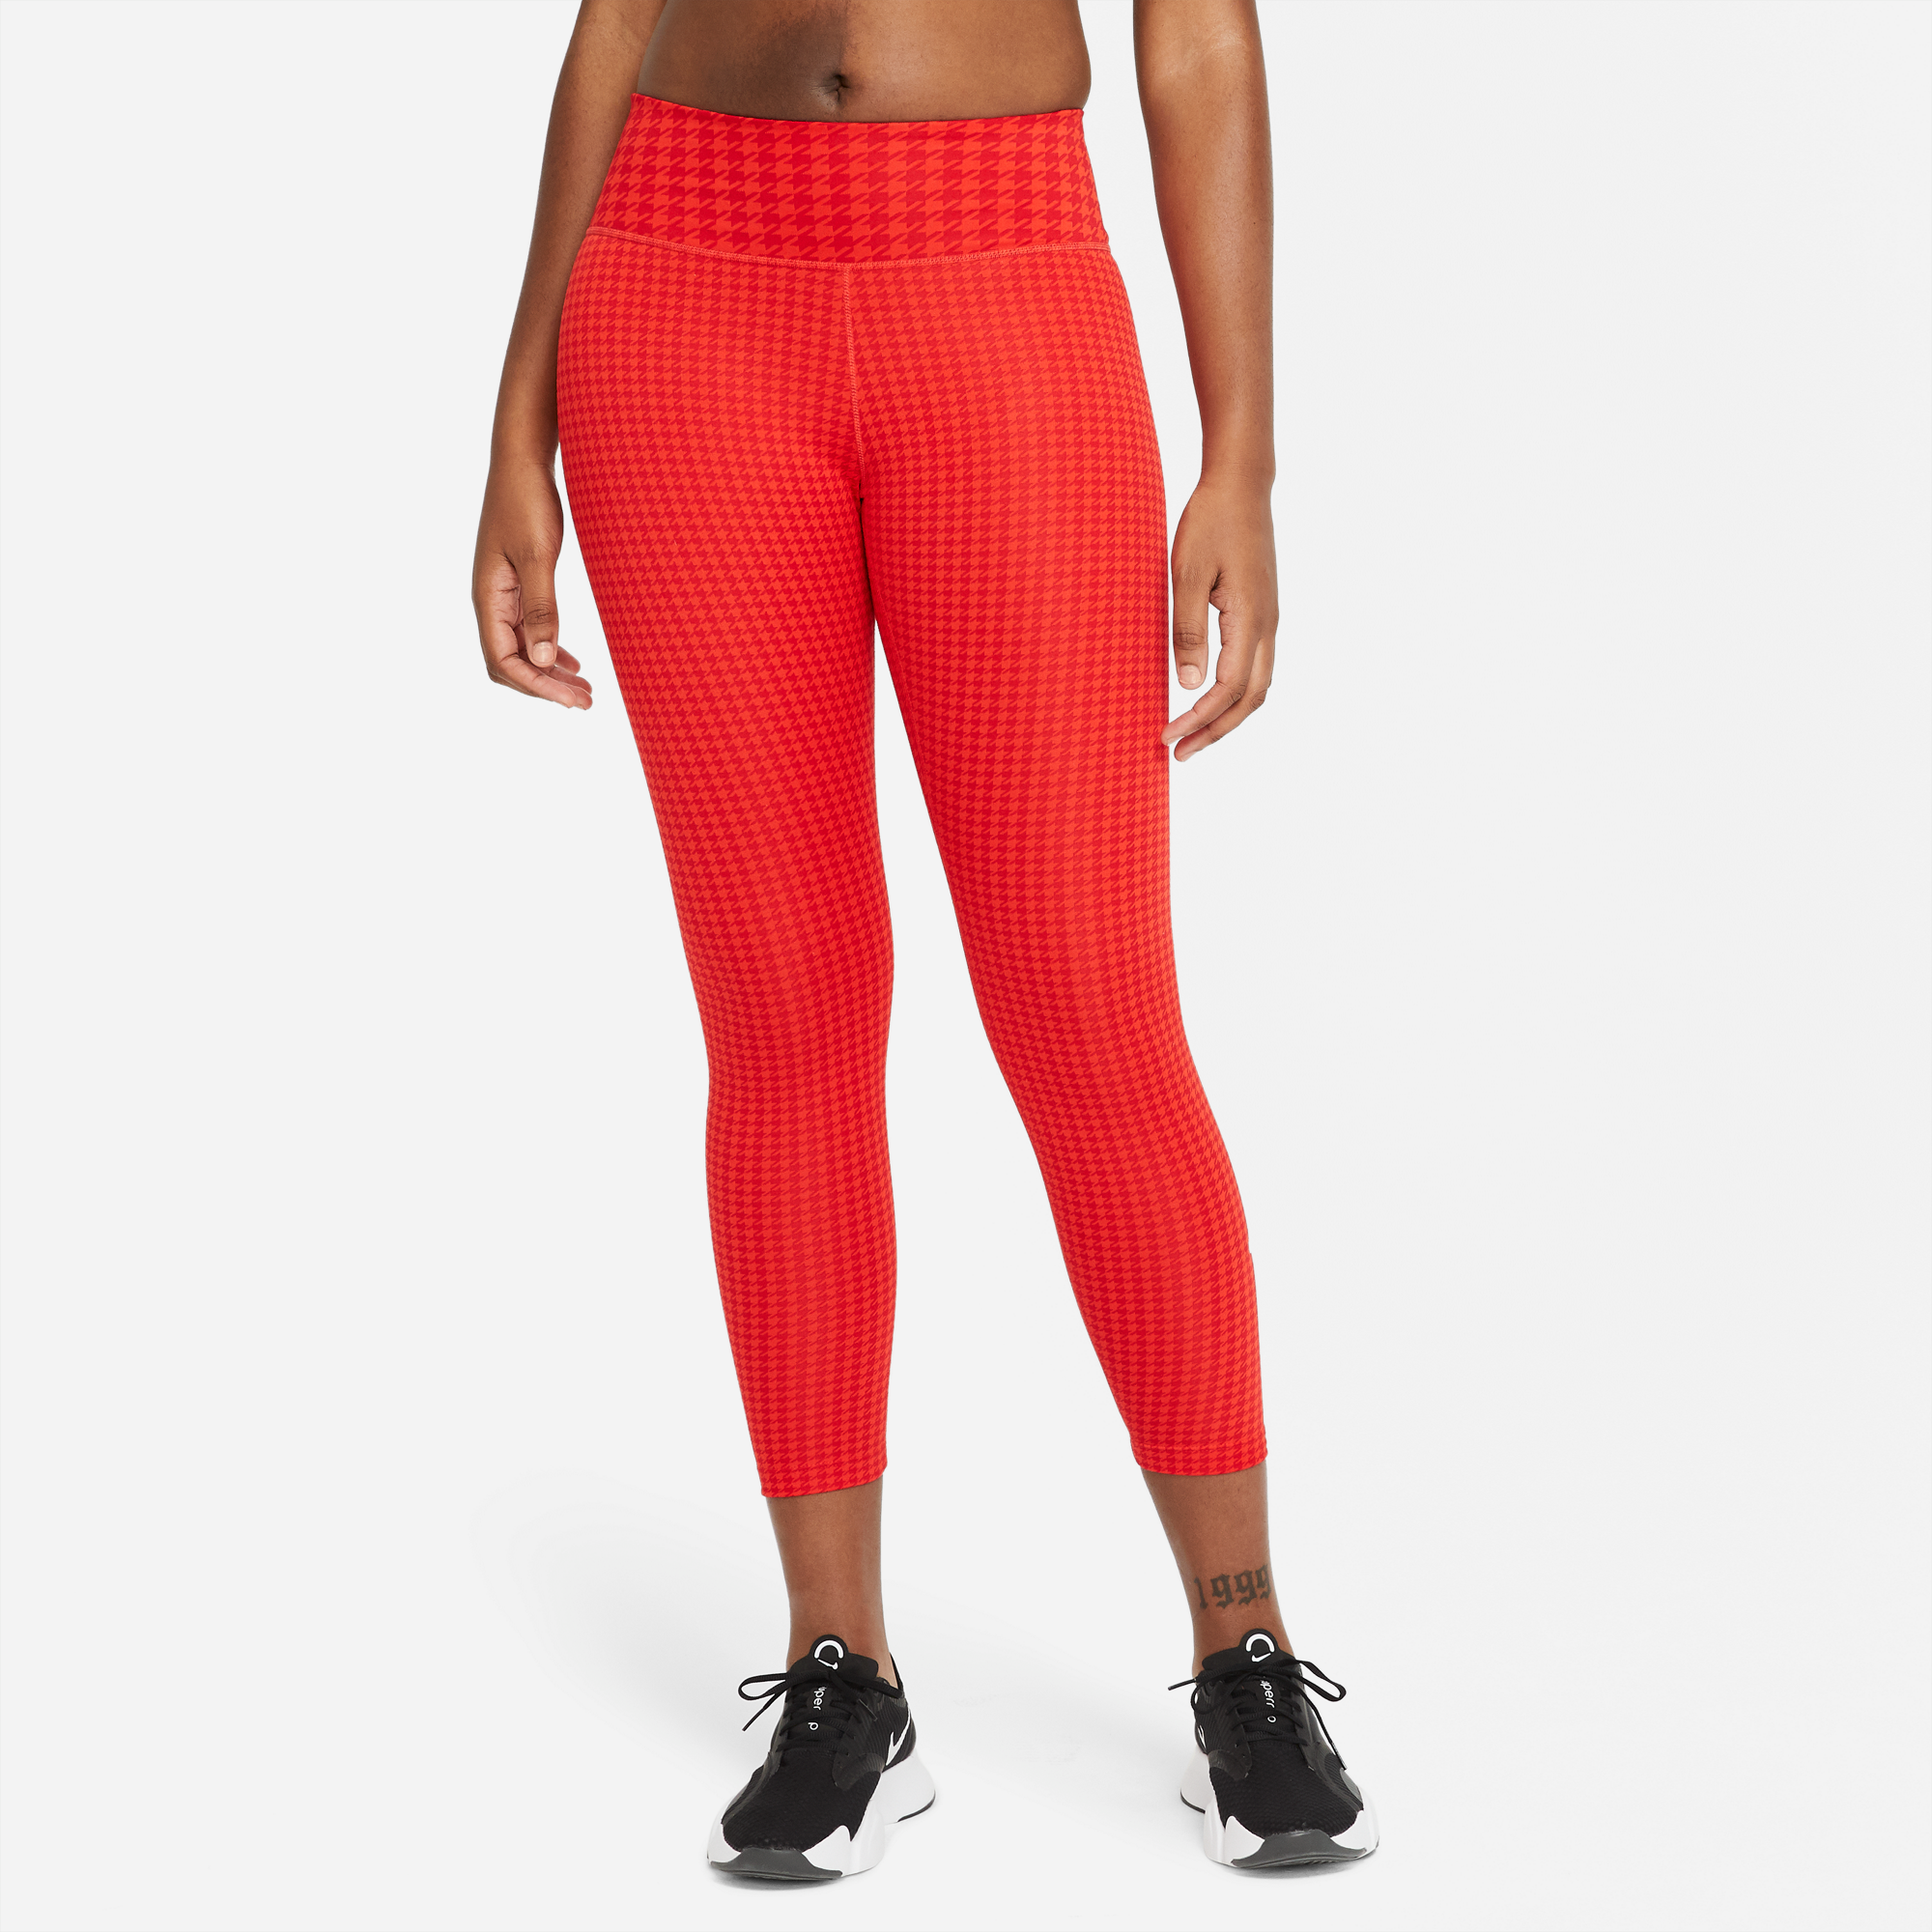 NIKE - WOMEN'S Nike W ONE CLRBK STRIPE 7/8 TG - Leggings - Women's -  black/chile red - Private Sport Shop